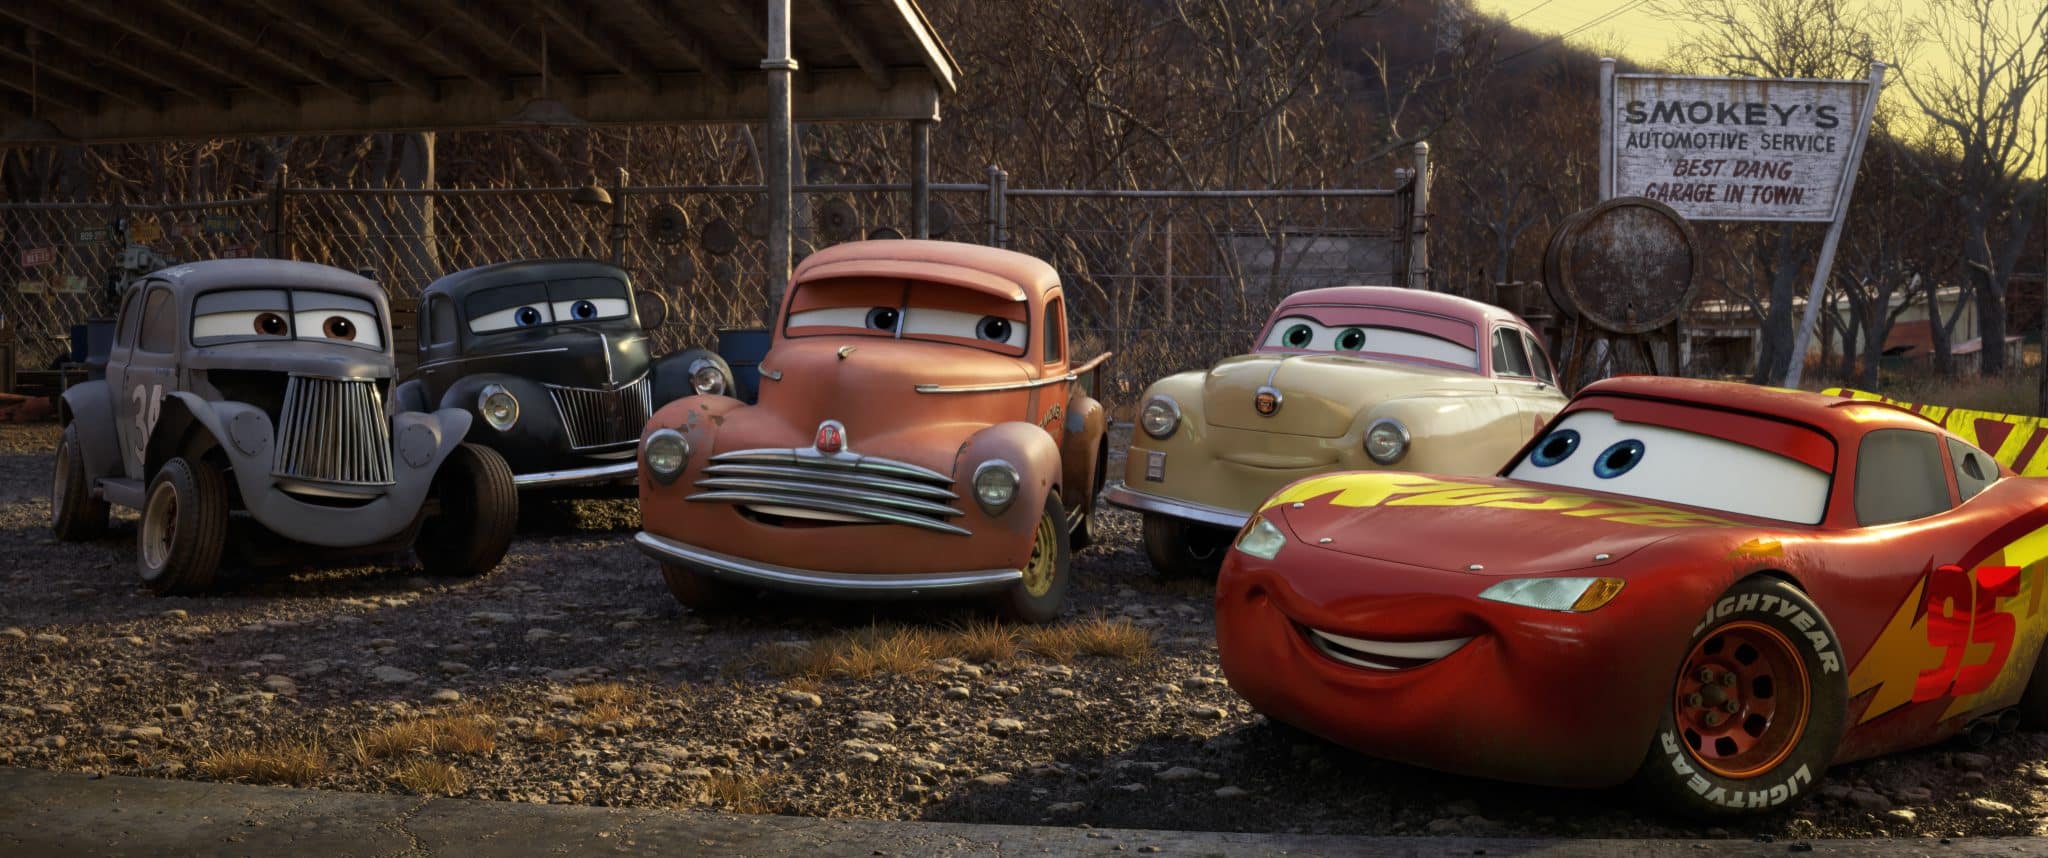 Tour of Pixar Animation Studios + NEW Cars 3 Trailer! #Cars3Event